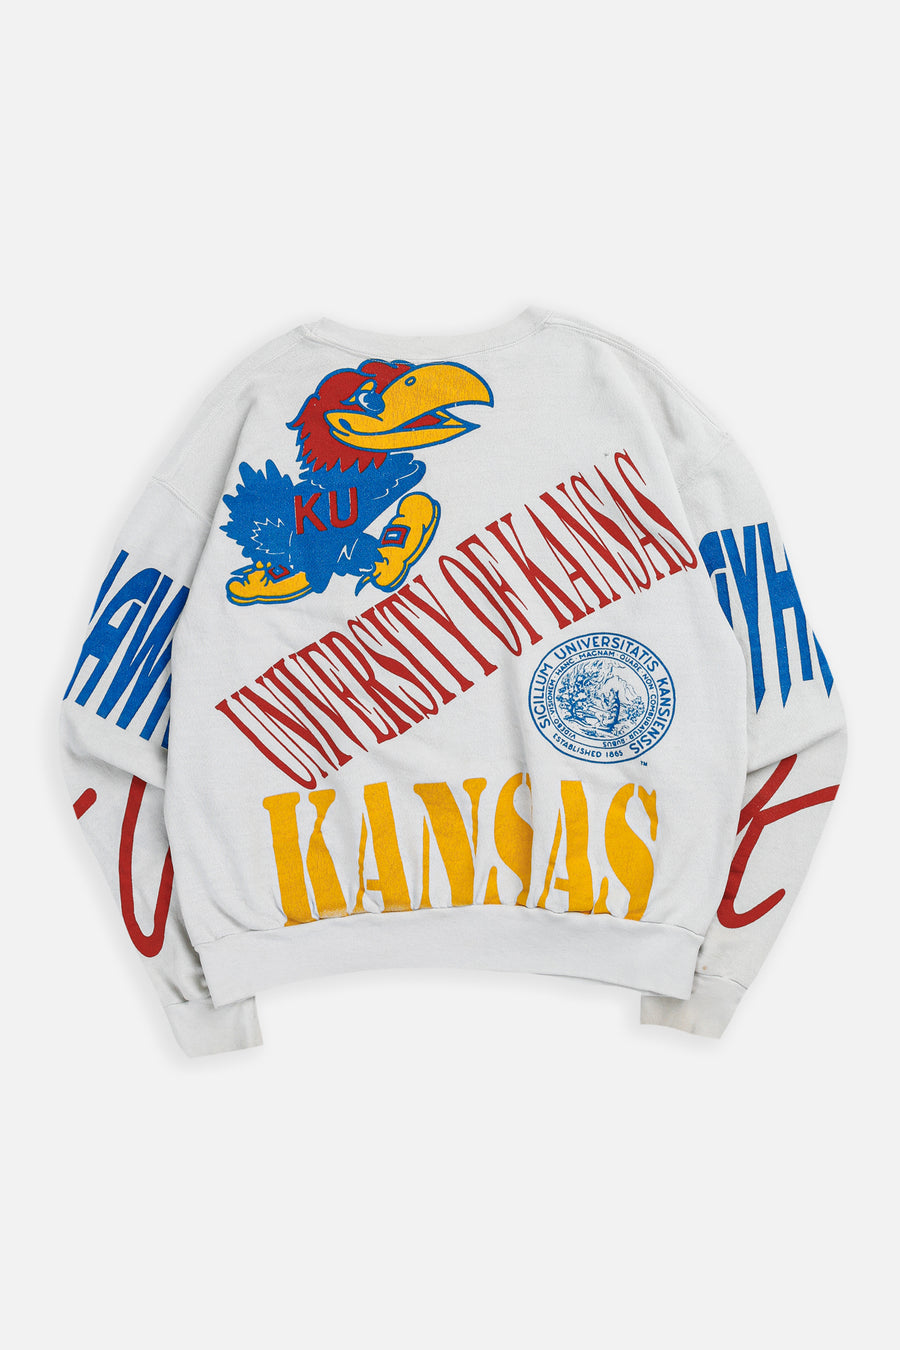 Vintage Kansas University Sweatshirt - S